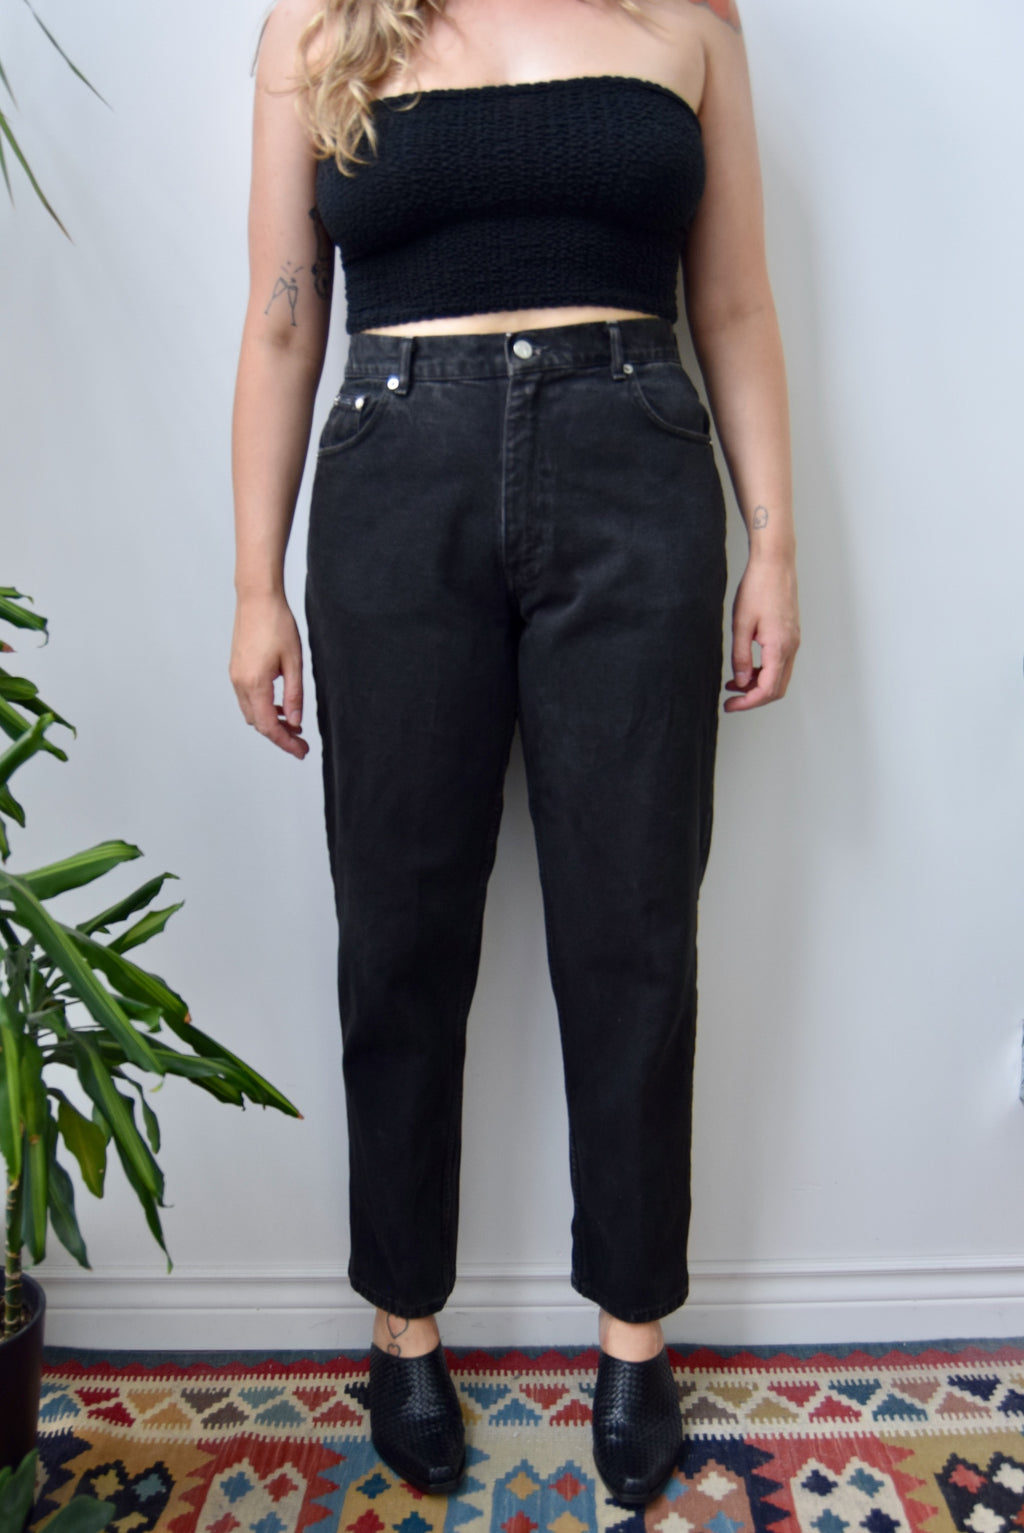 Black Calvin Klein Jeans